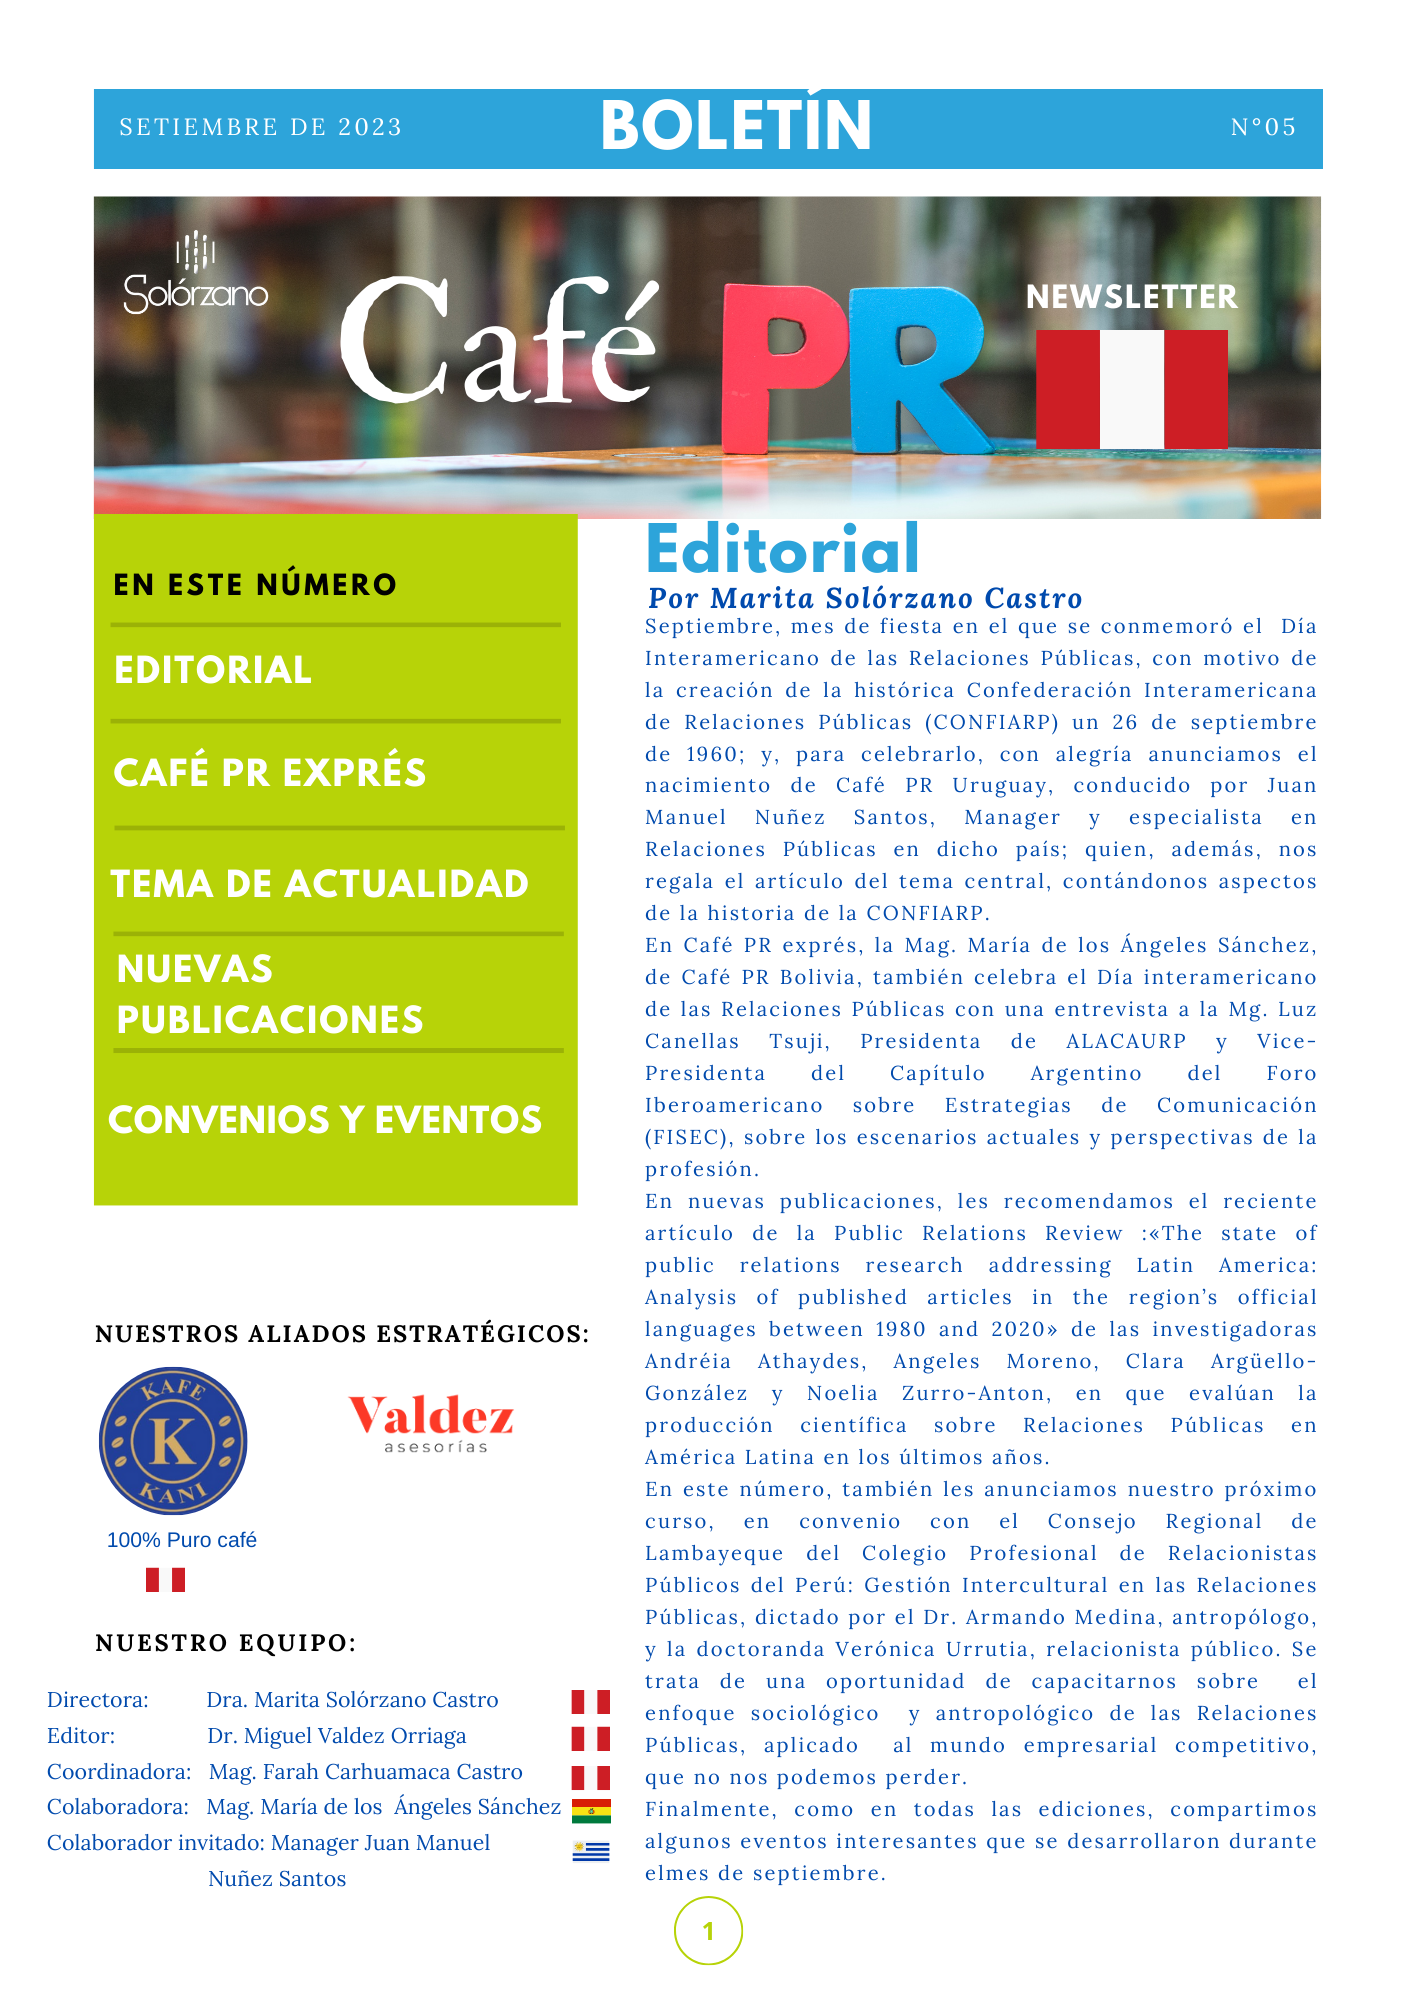 Café PR Newsletter – N°5